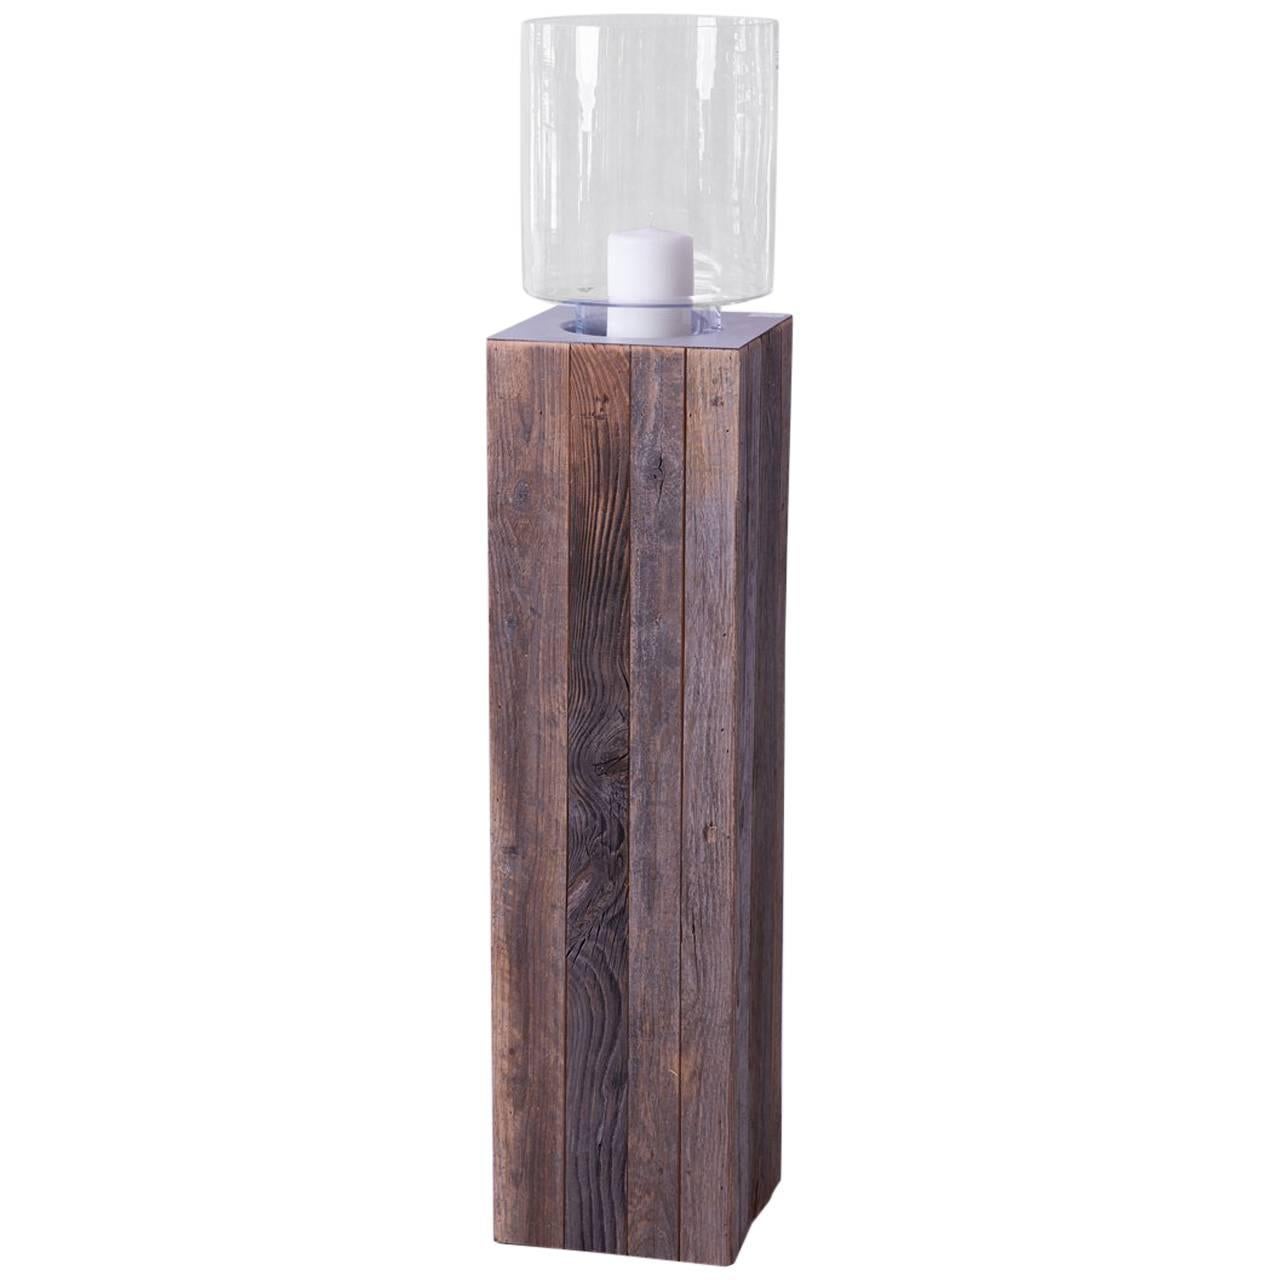 Contemporary Wood Pillar Candleholder with Glass Hurricane